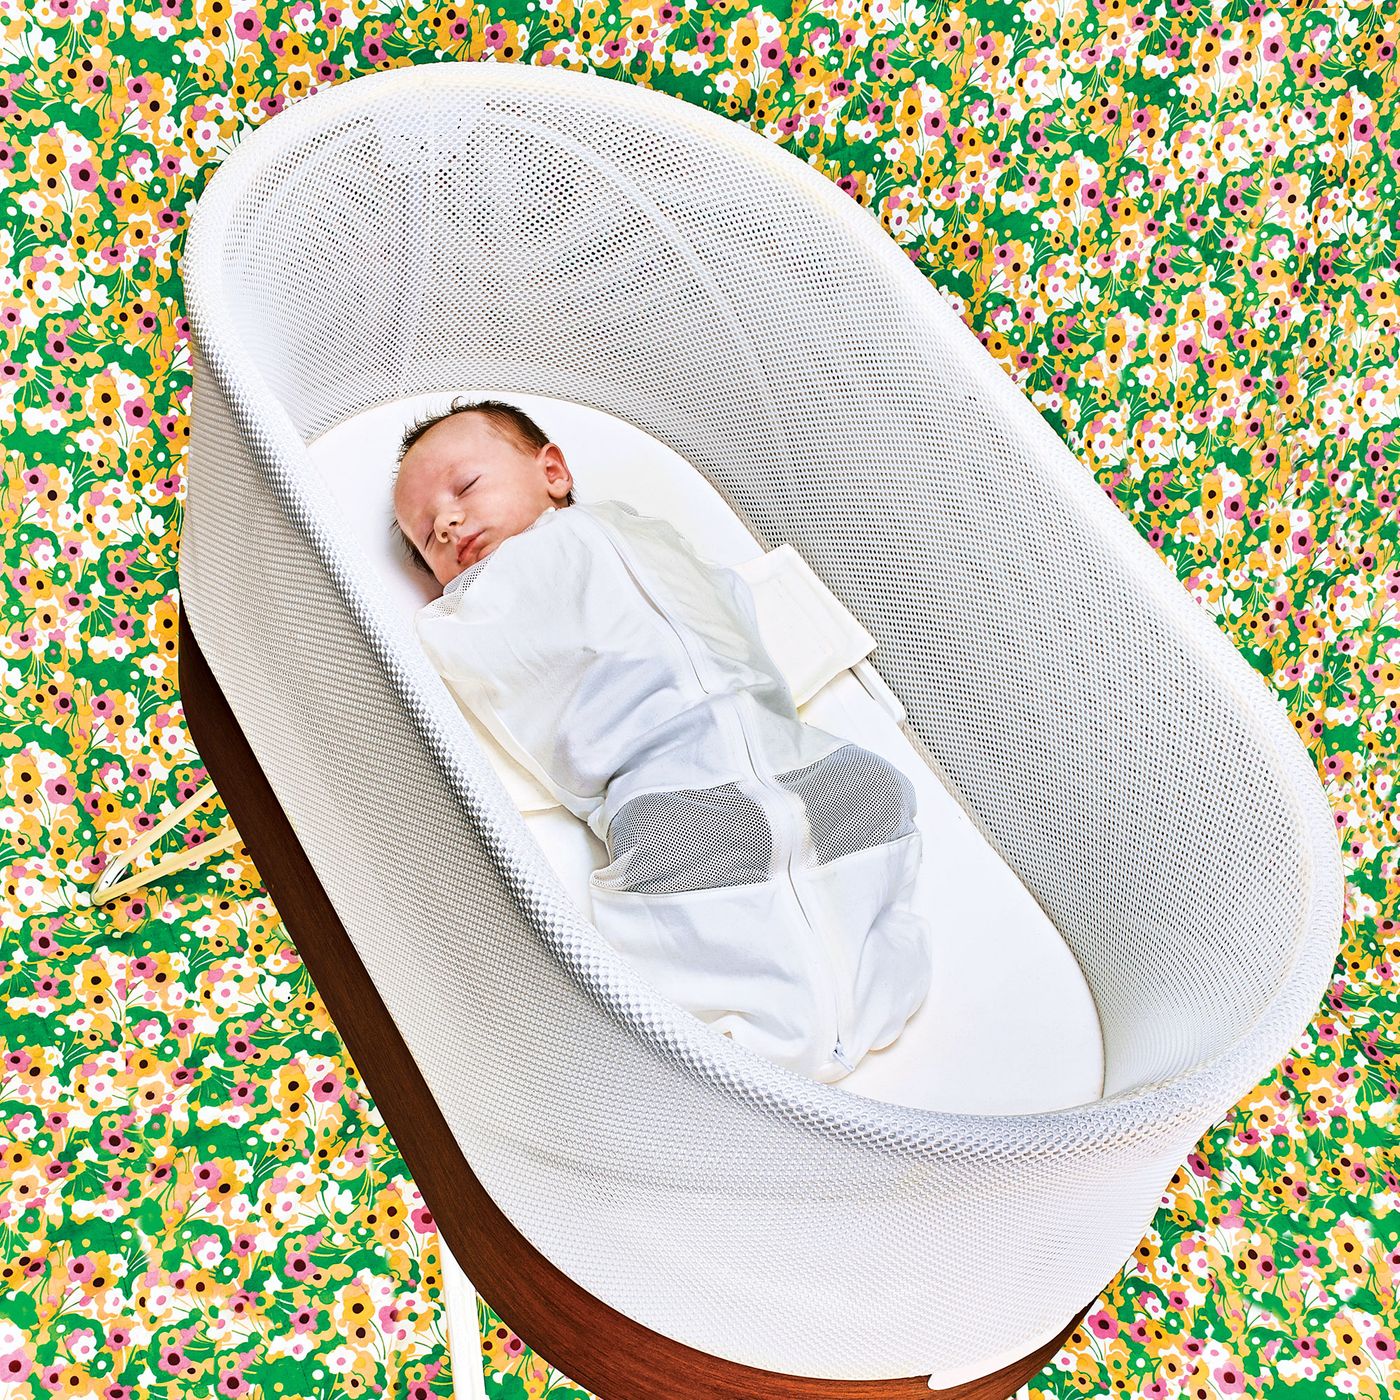 The Happiest Baby method: How the 5 S's help babies sleep